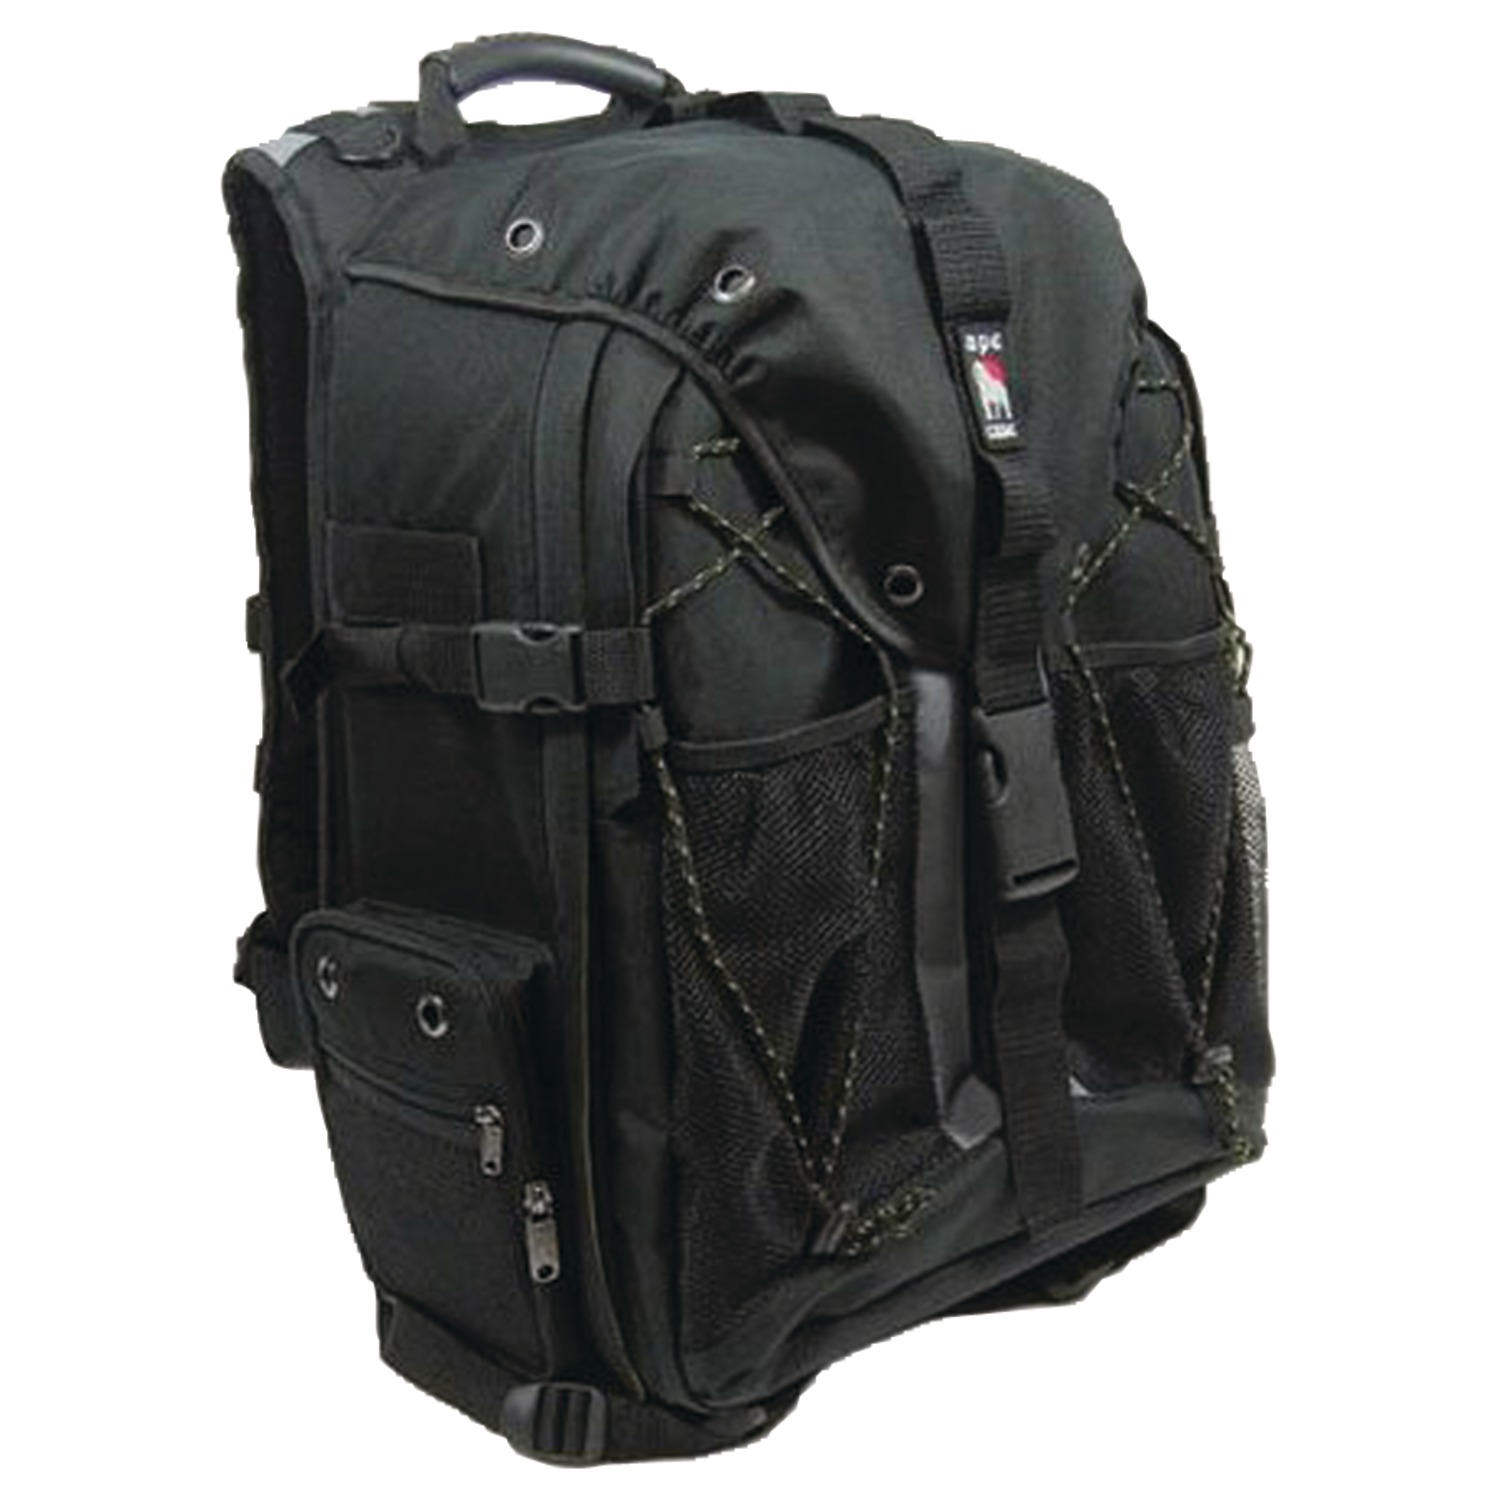 Ape Case Digital SLR and Laptop Backpack, ACPRO2000 - image 1 of 3